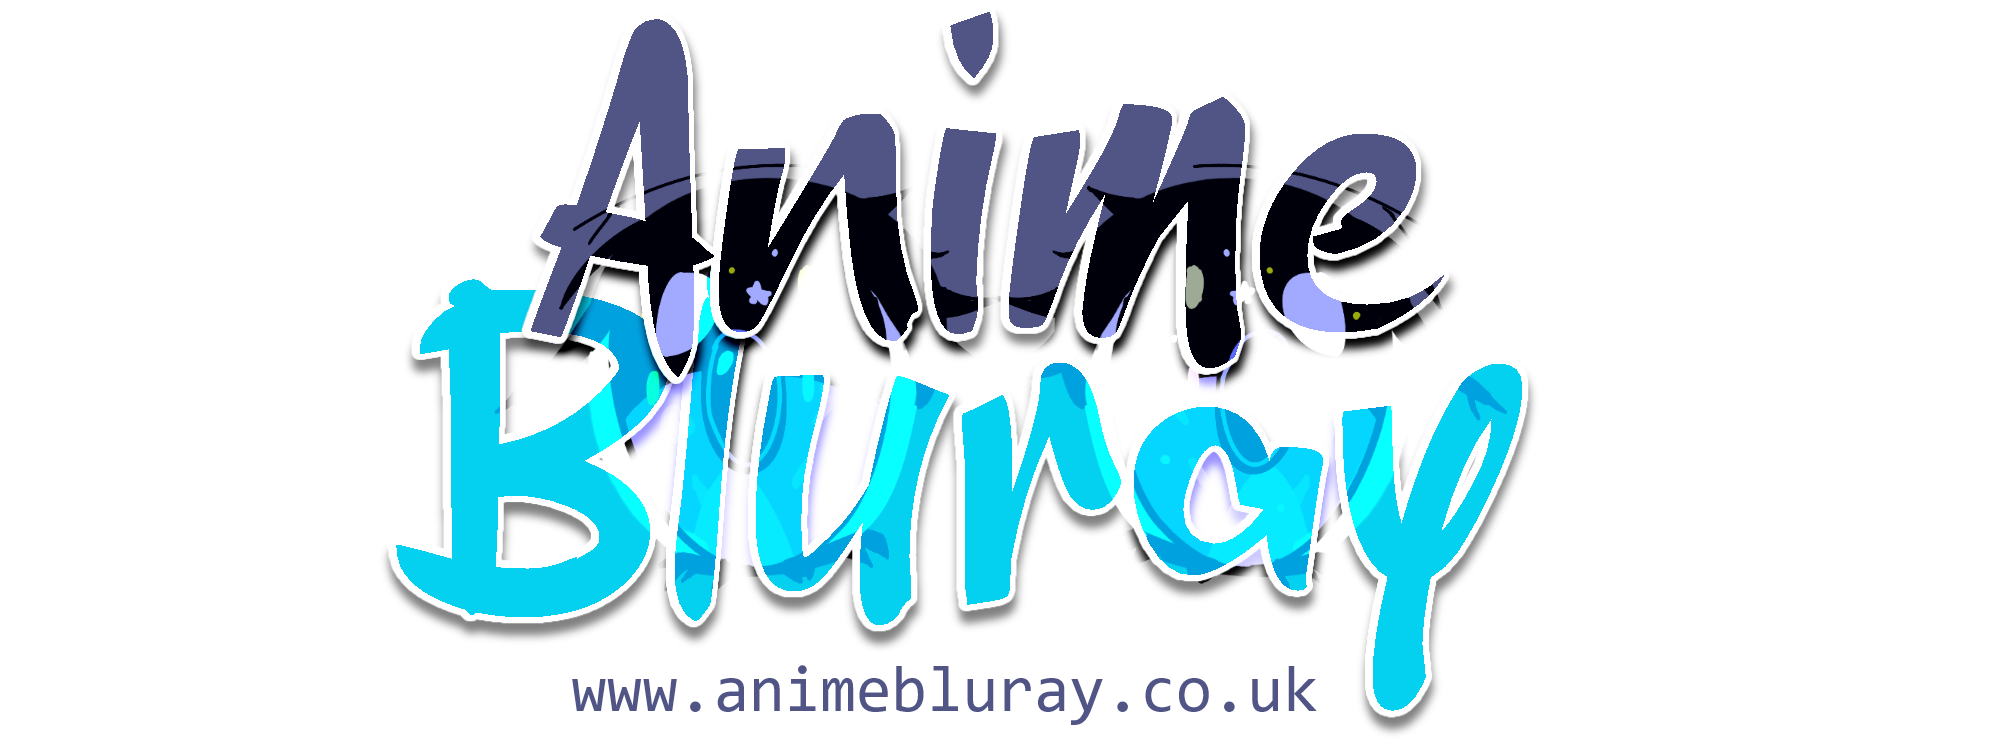 www.animebluray.co.uk